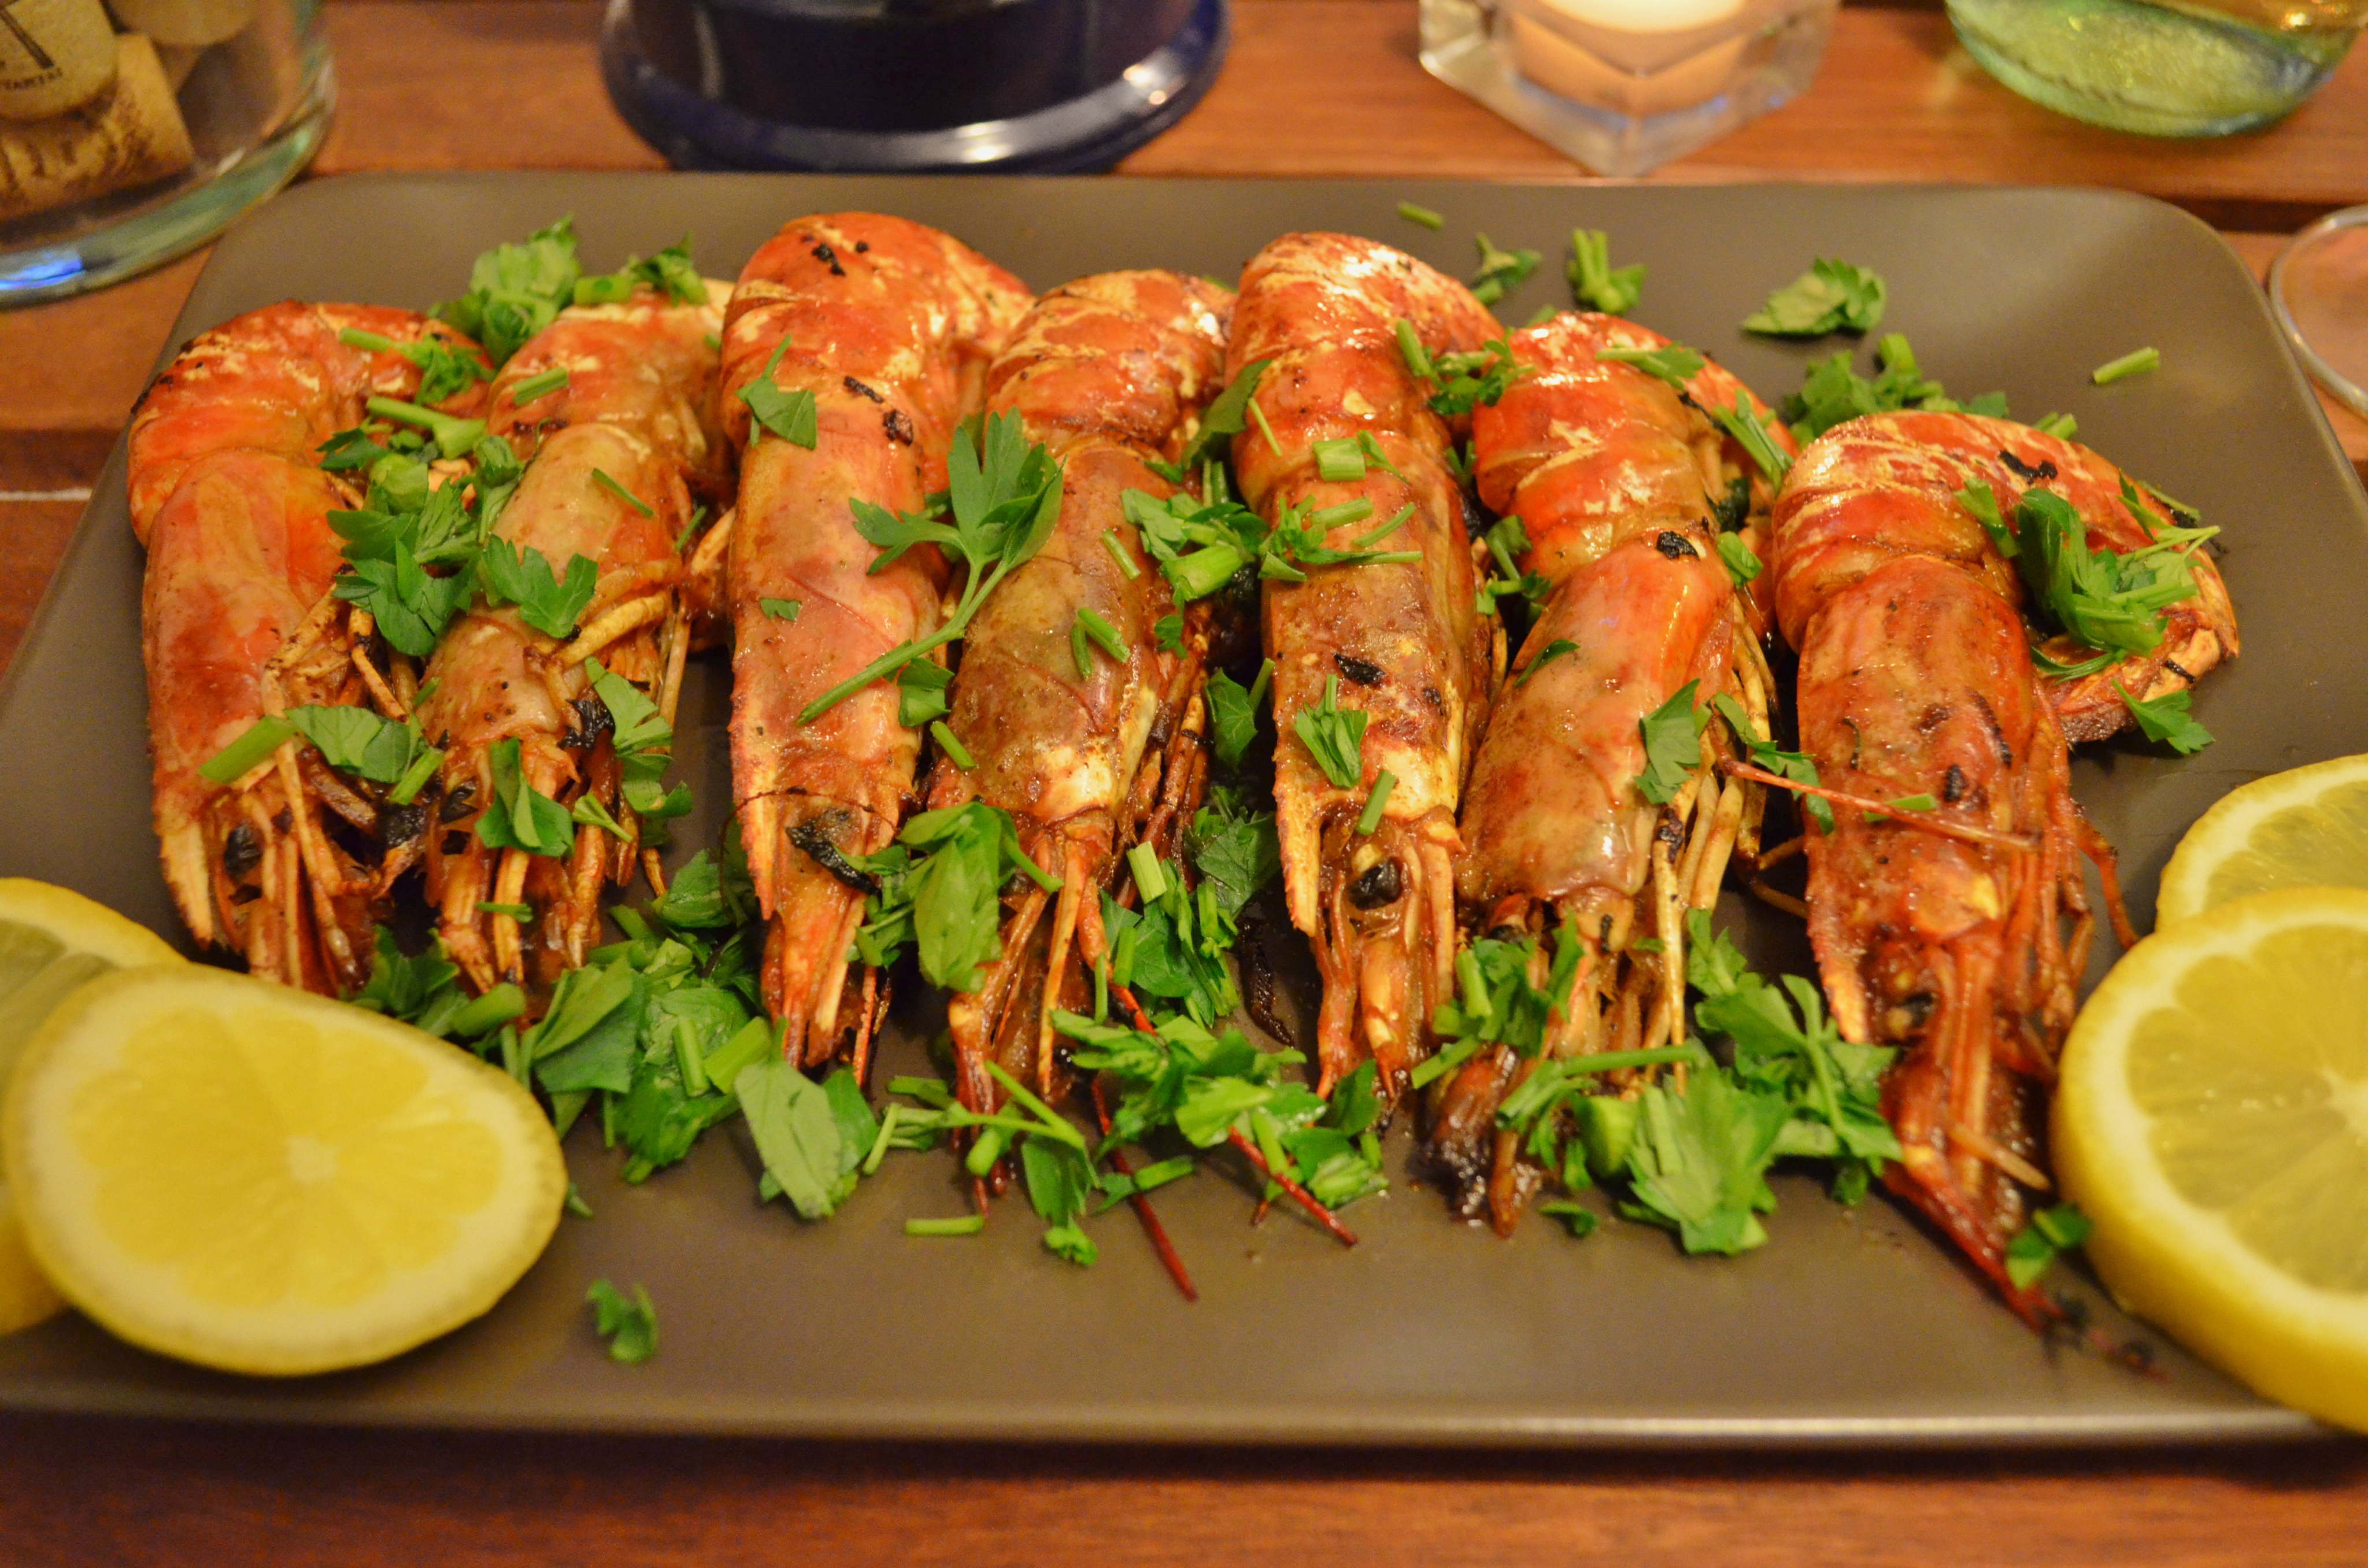 Shrimps with garlic, lemon and parsley!